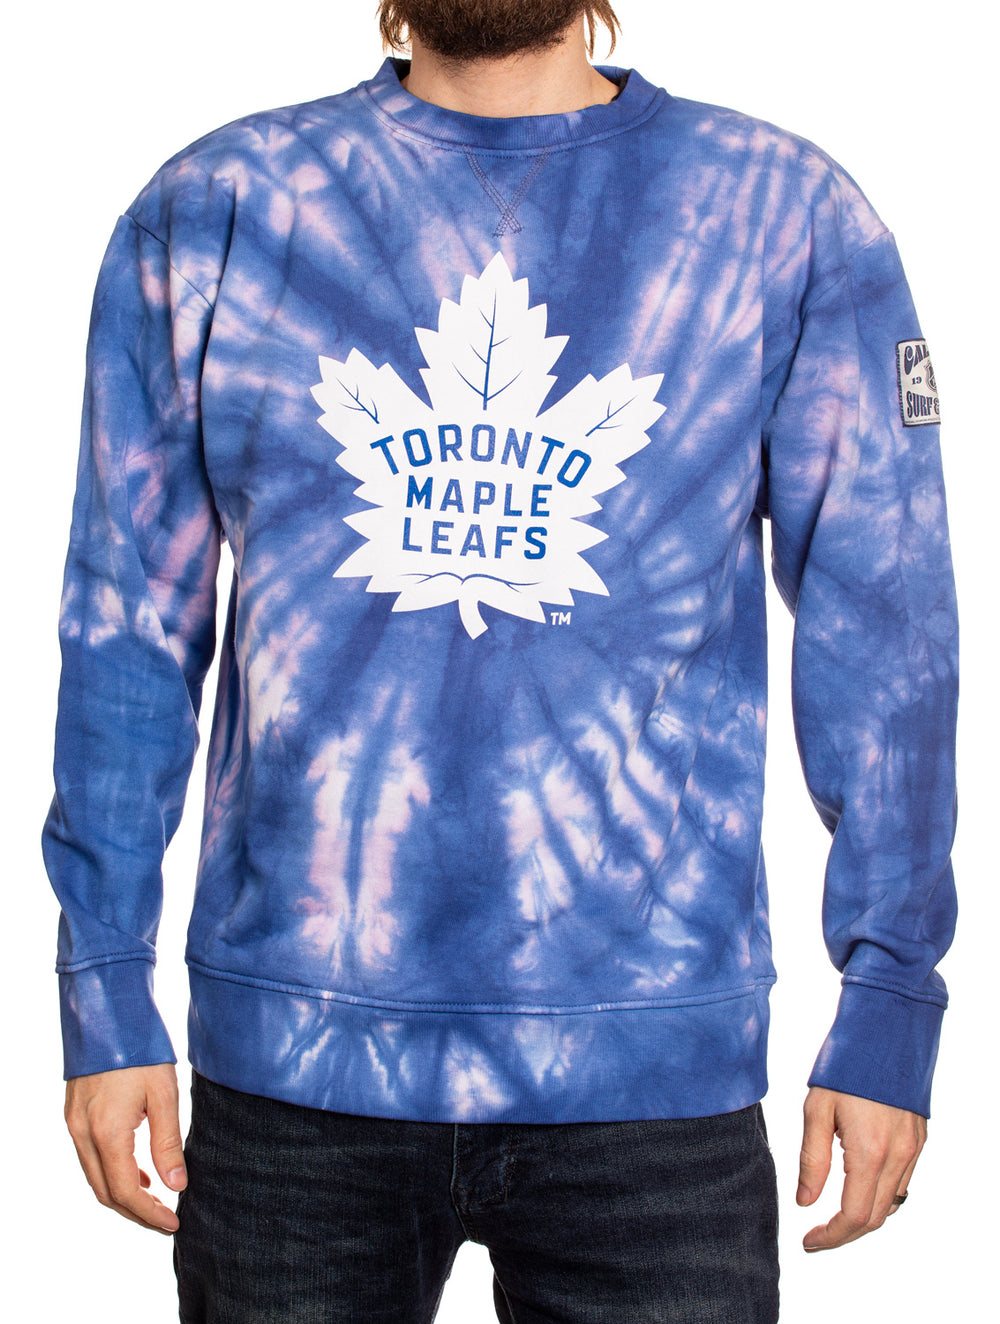 Toronto Maple Leafs NHL Long Sleeve Maternity Shirt Cinched Waist Blue  Women's L